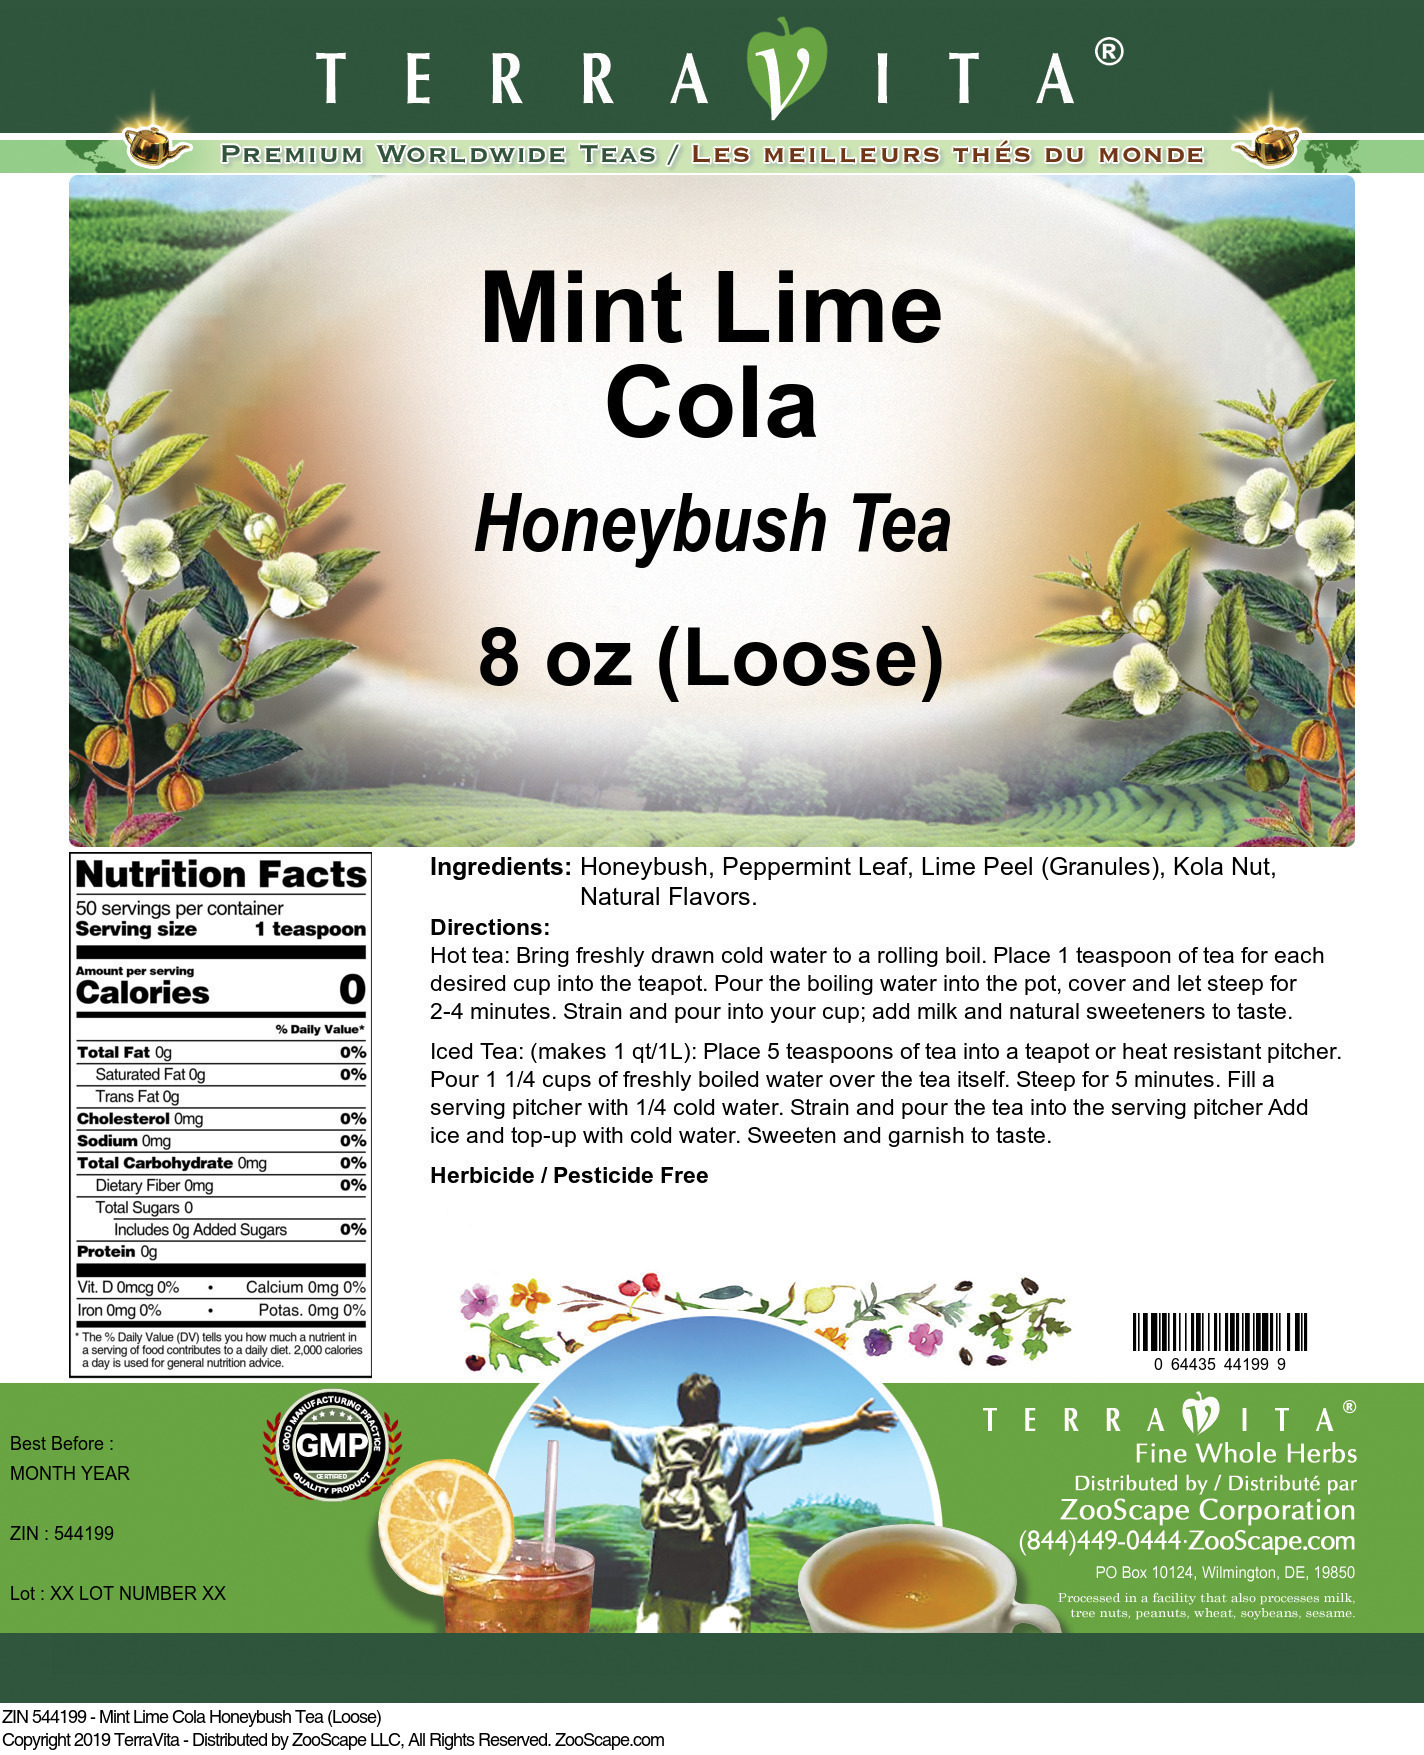 Mint Lime Cola Honeybush Tea (Loose) - Label